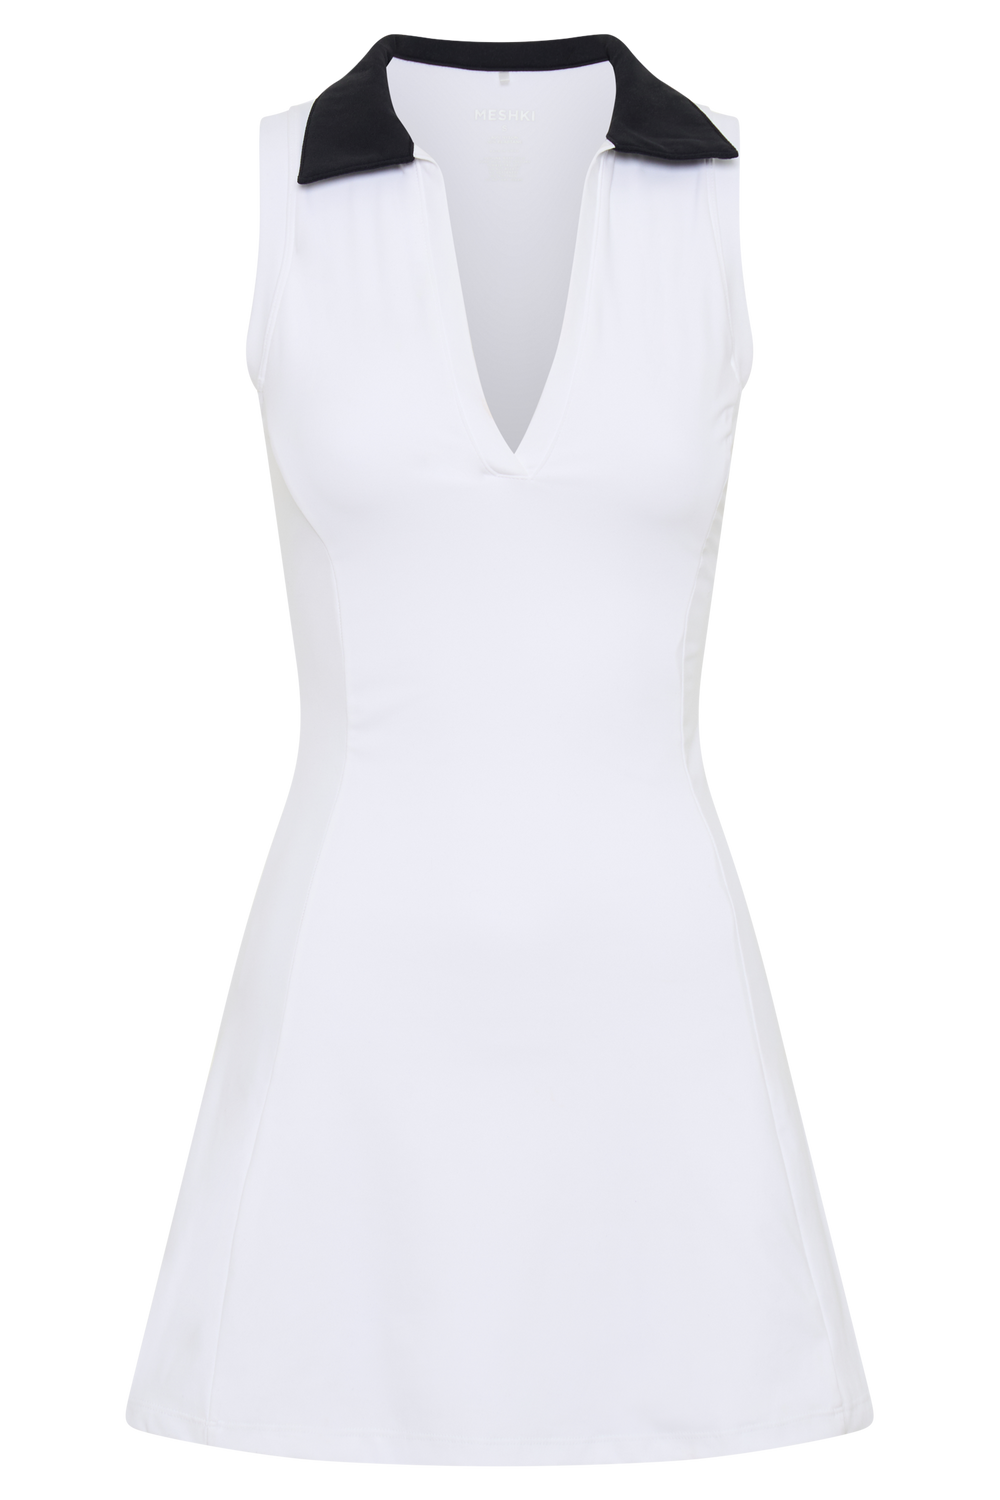 Estelle Sleeveless Collared Active Mini Dress - Black/White